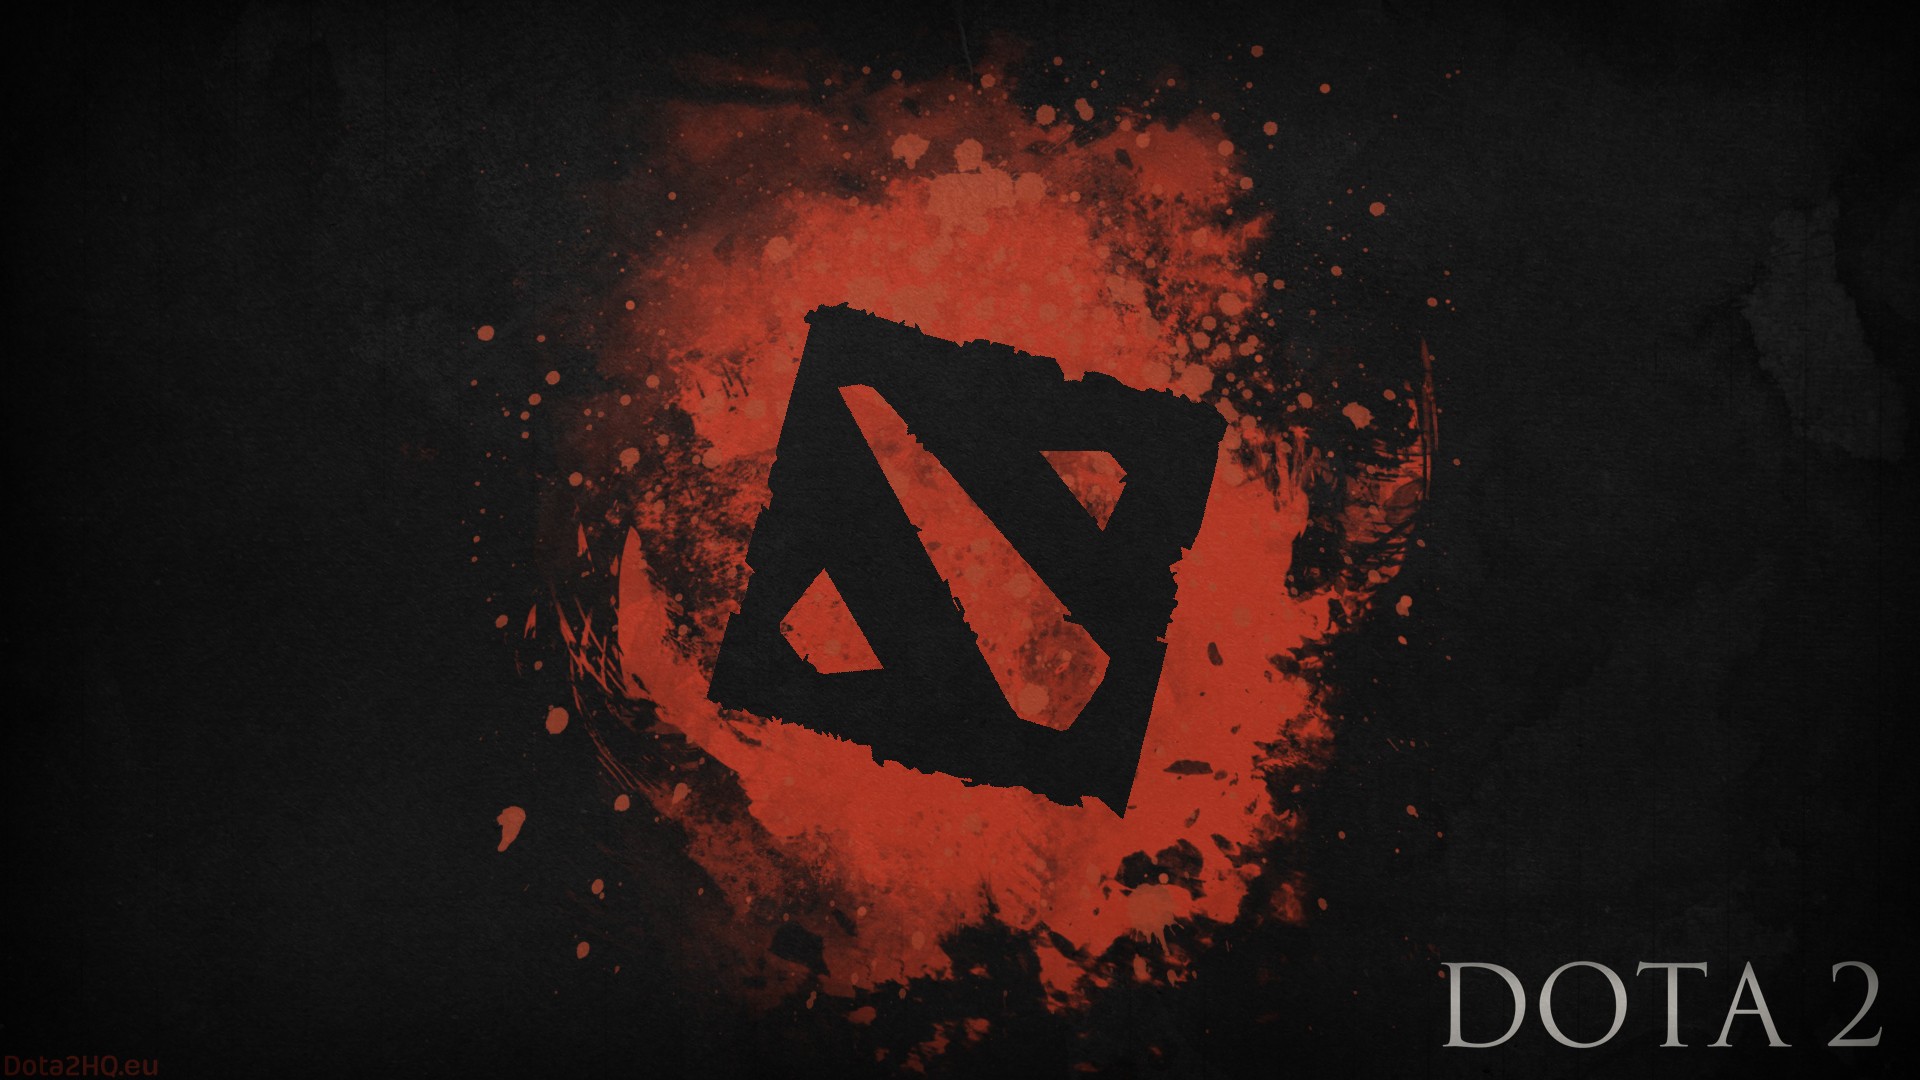 Dota 2, Dota, Defense Of The Ancient, Valve, Valve Corporation Wallpaper